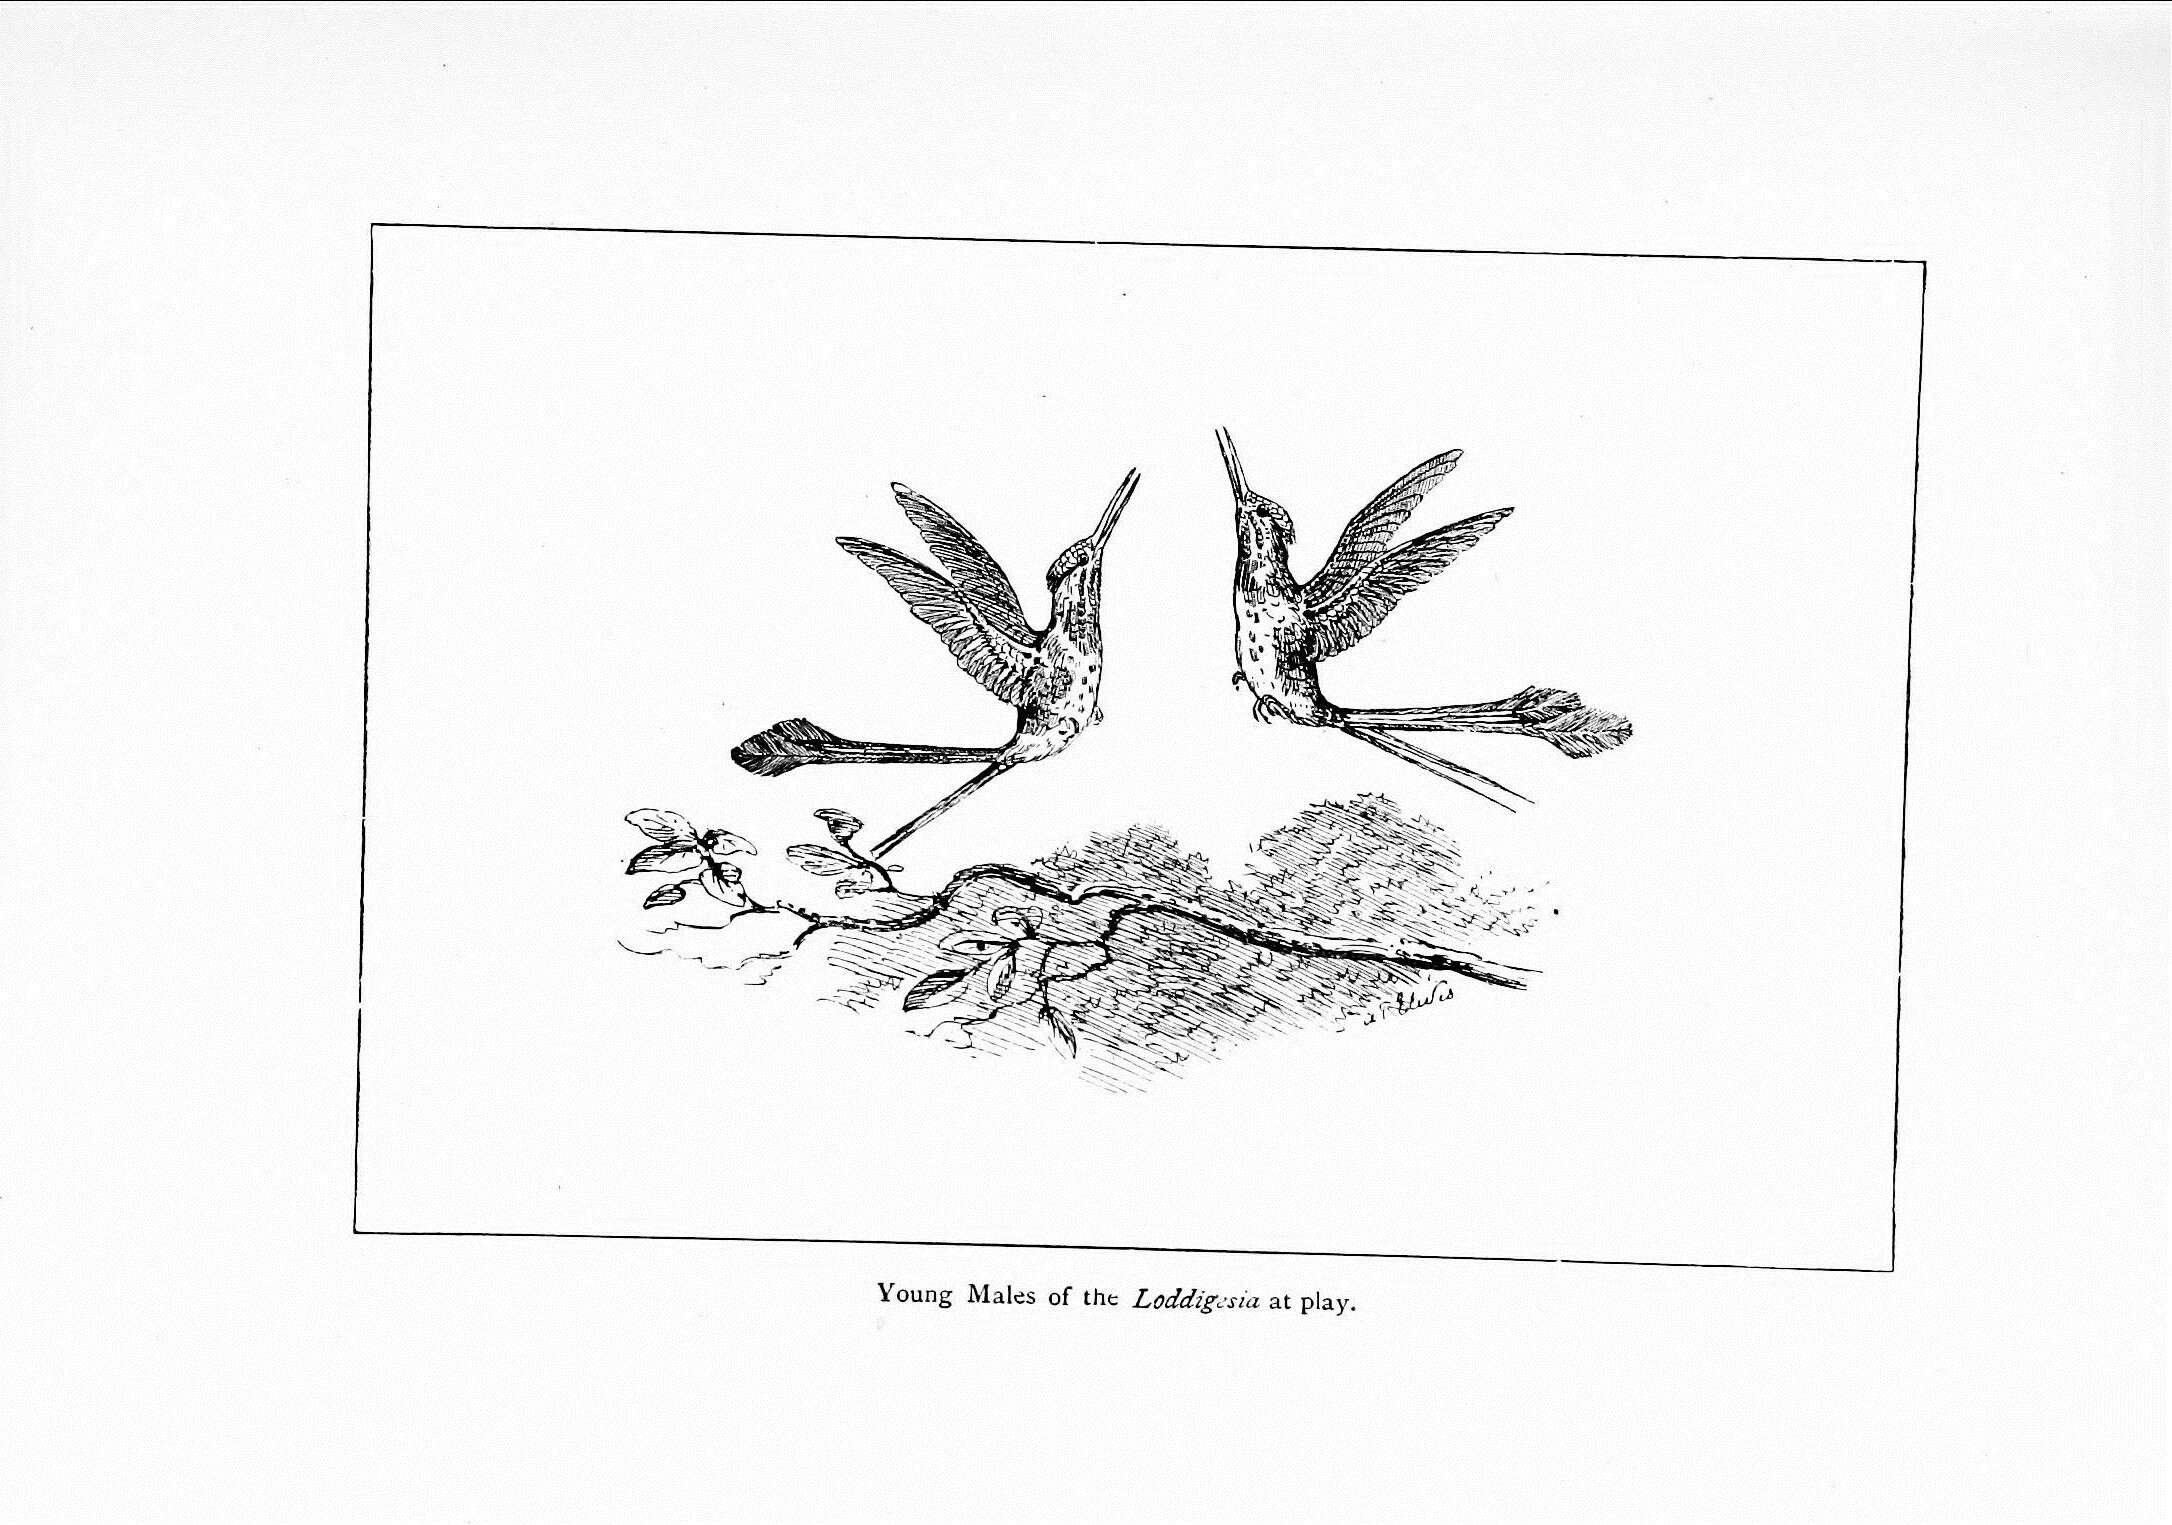 Image de Ocreatus Gould 1846